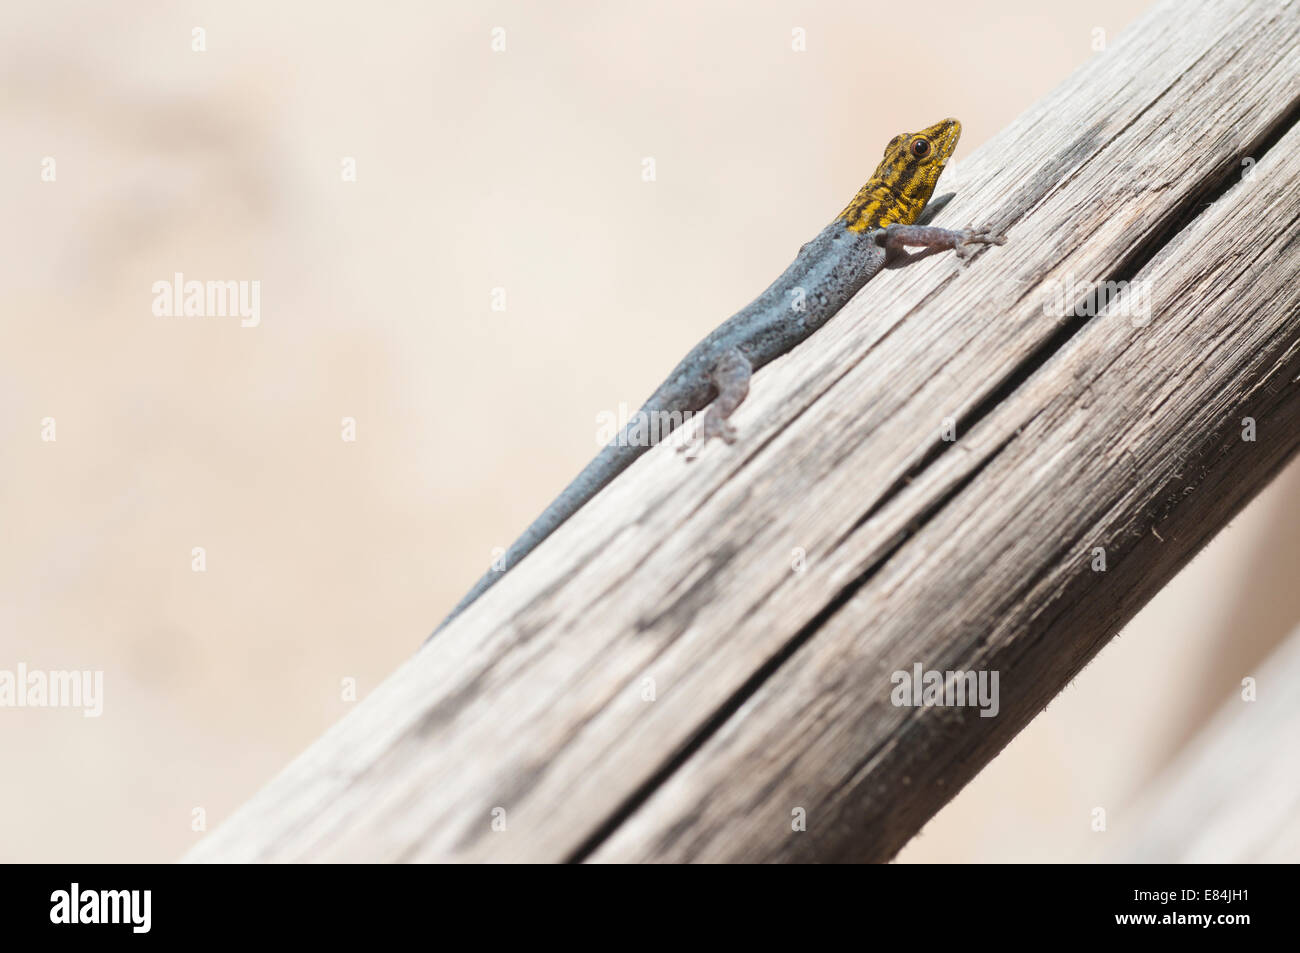 An East African Dwarf Yellow-headed Gecko resting on wooden beam in Dar es Salaam, Tanzania Stock Photo